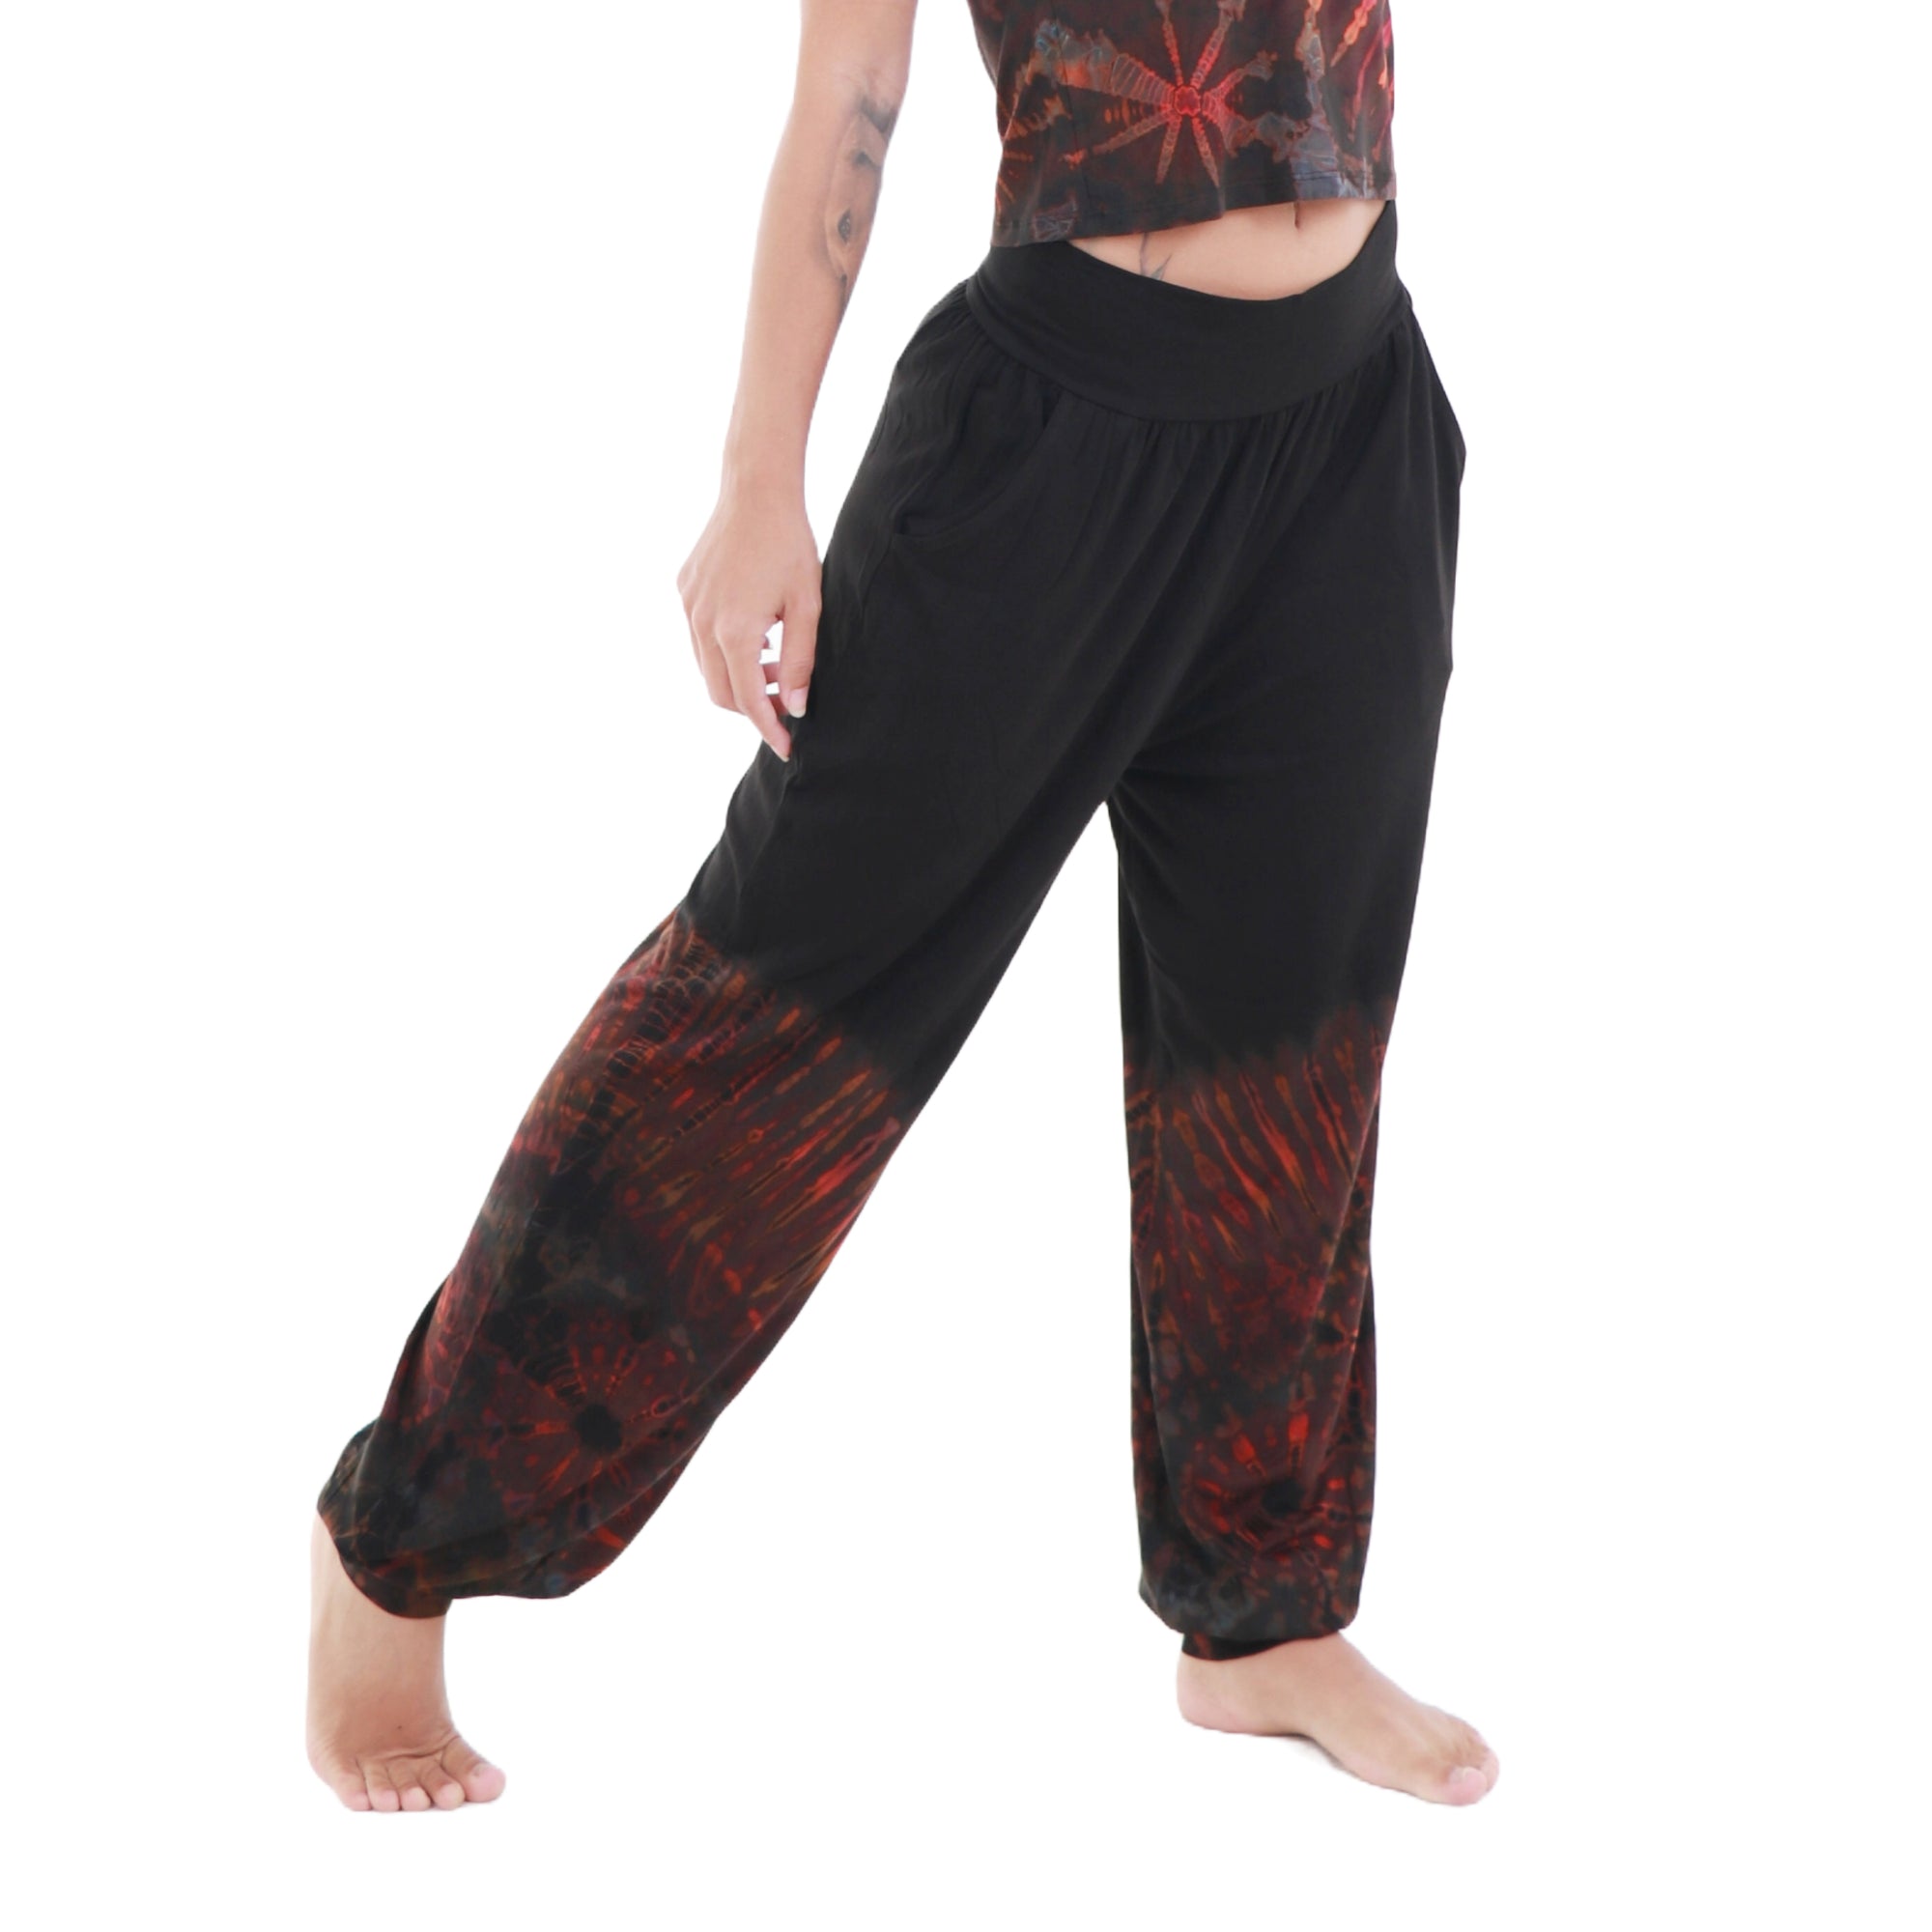 Handmade Harem Pants - Tie Dye Rayon Jogger Style Pants